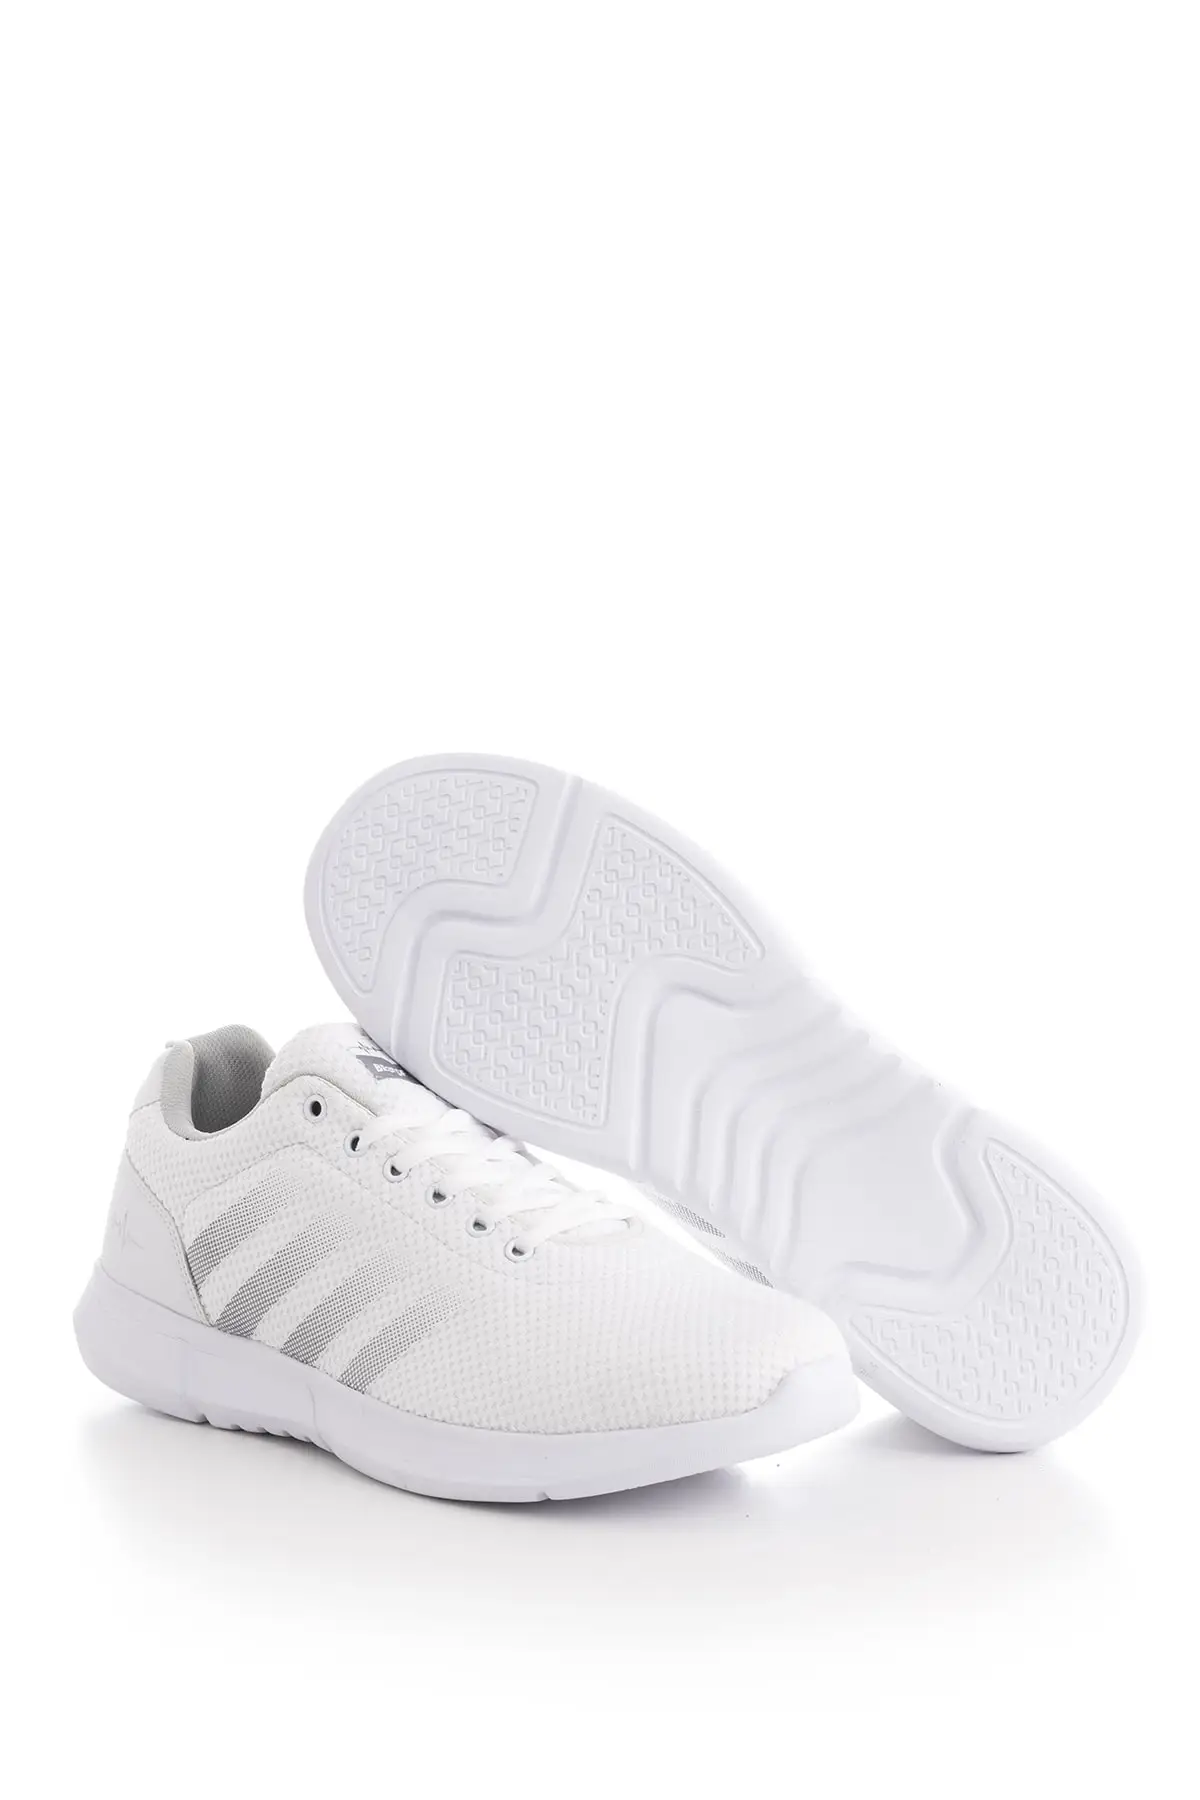 

Men Sport Footwear White Unisex Sneaker DG- Breathable Sneakers Lightweight Trainers Vulcanize Shoes Comfort Cool